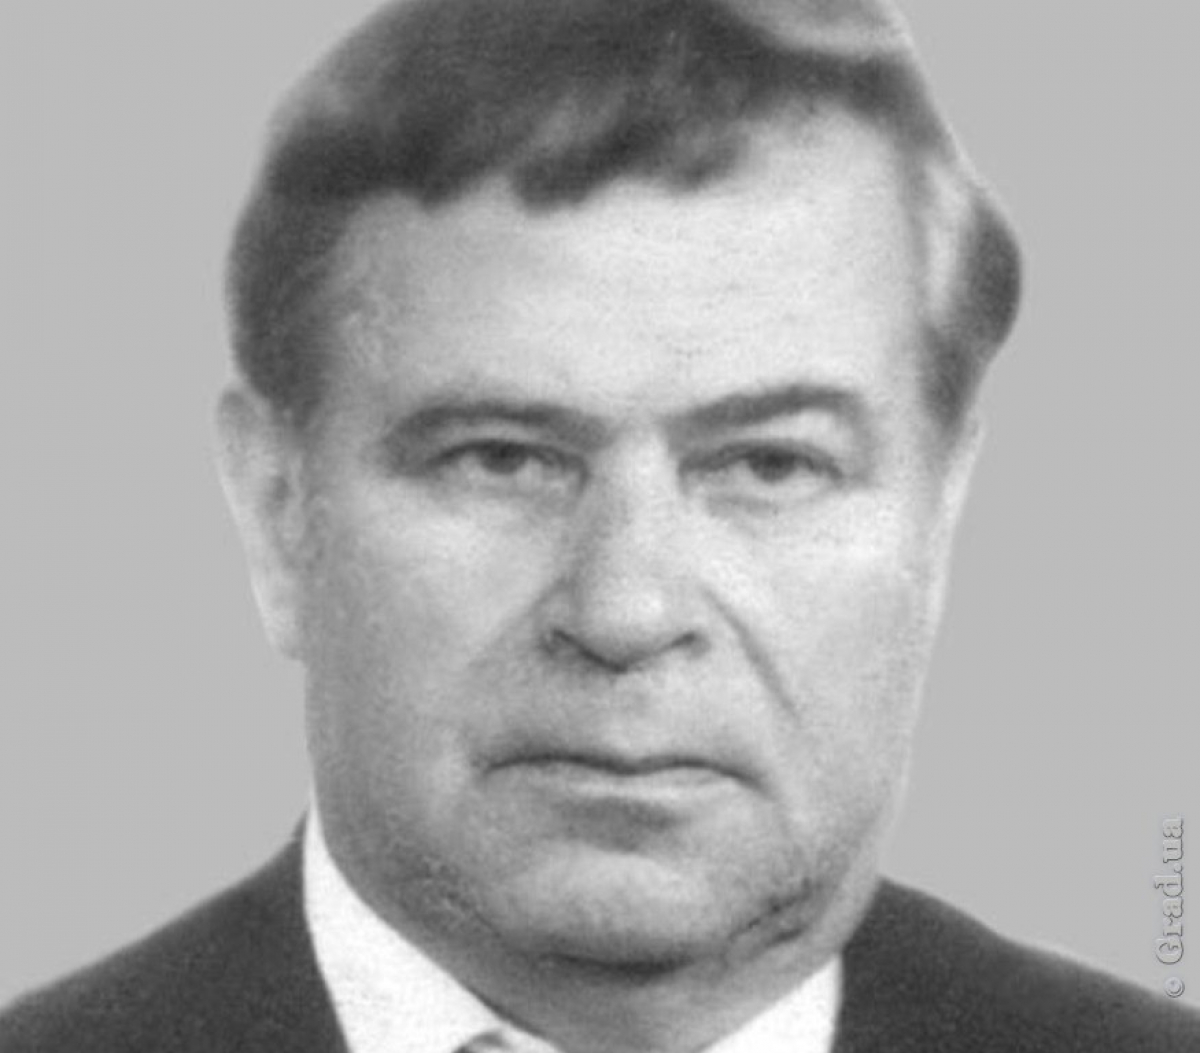 Александр Михайлович Батров